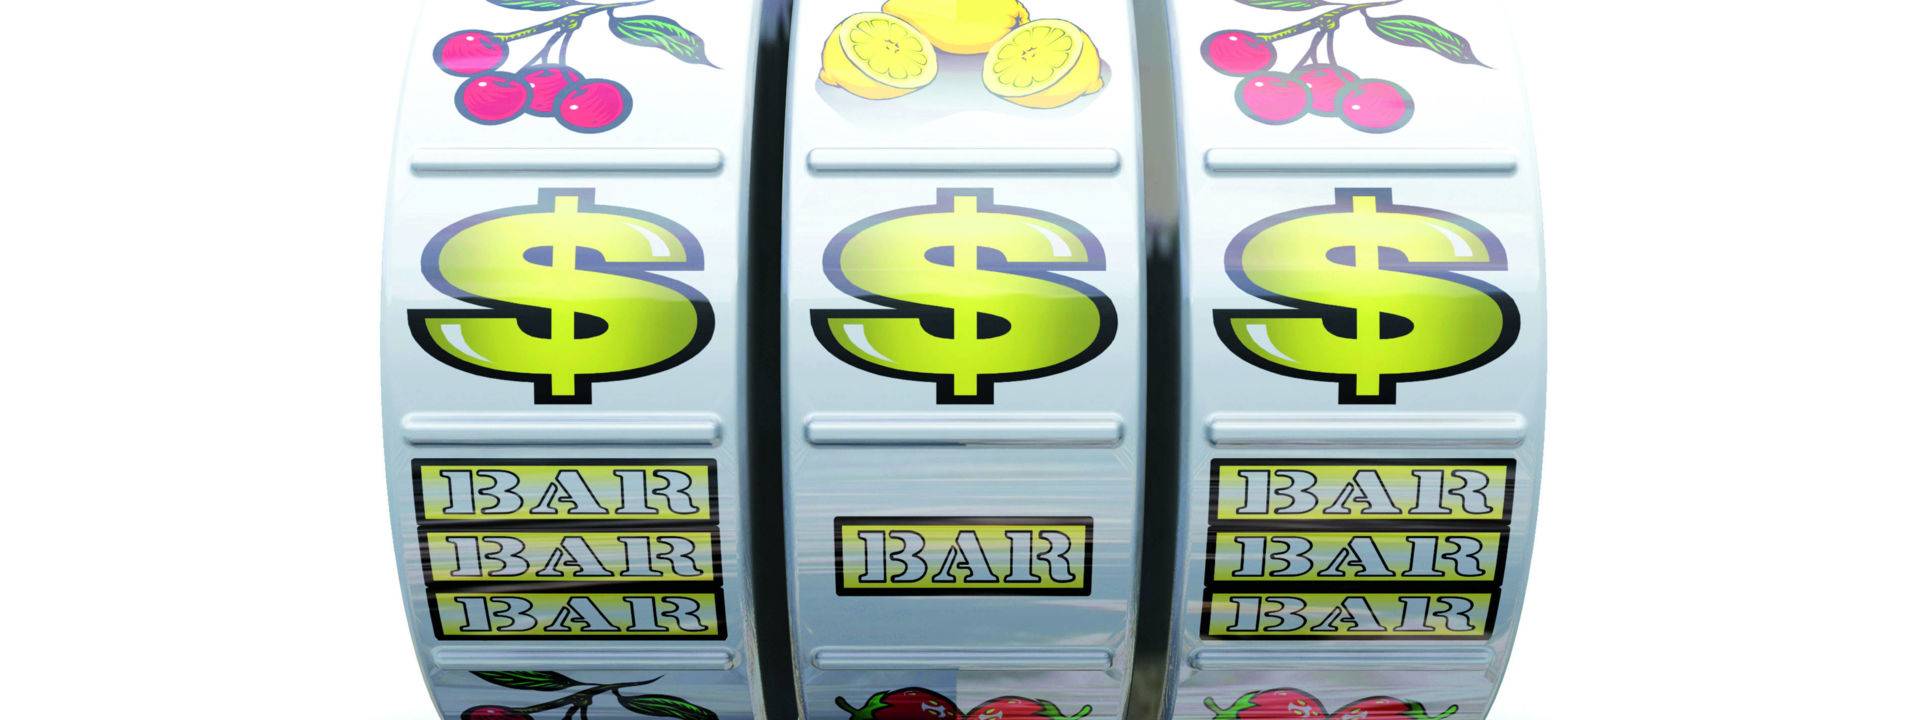 Machines sous casinos JOA